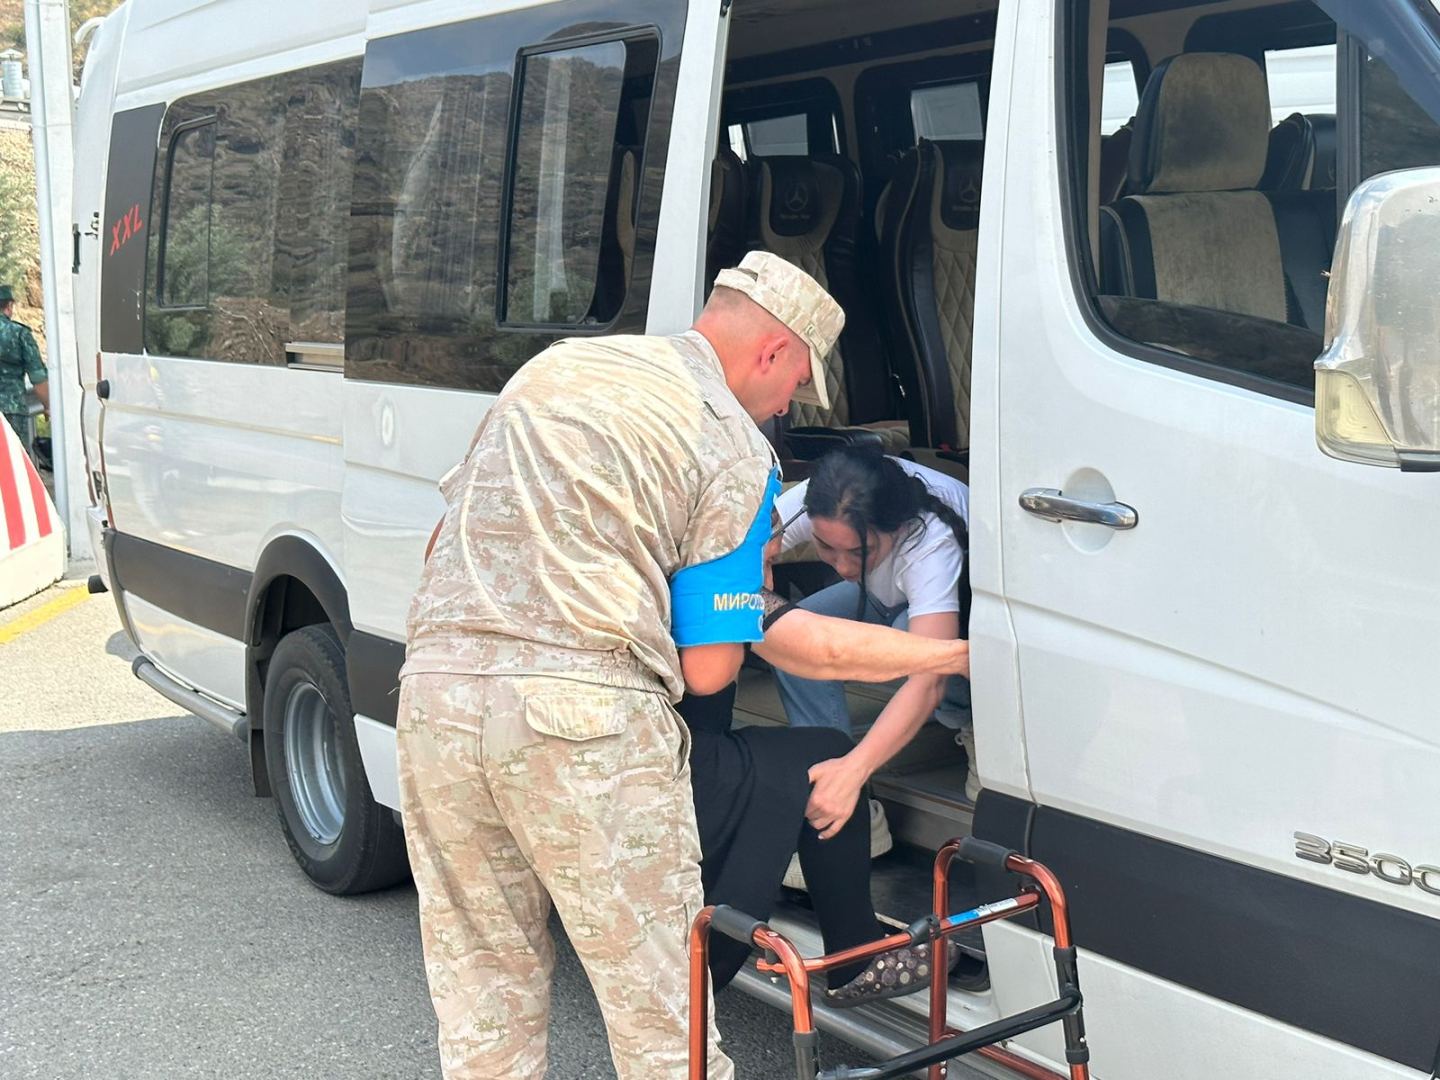 100-year-old Armenian resident of Azerbaijan's Karabakh freely crosses Lachin border checkpoint